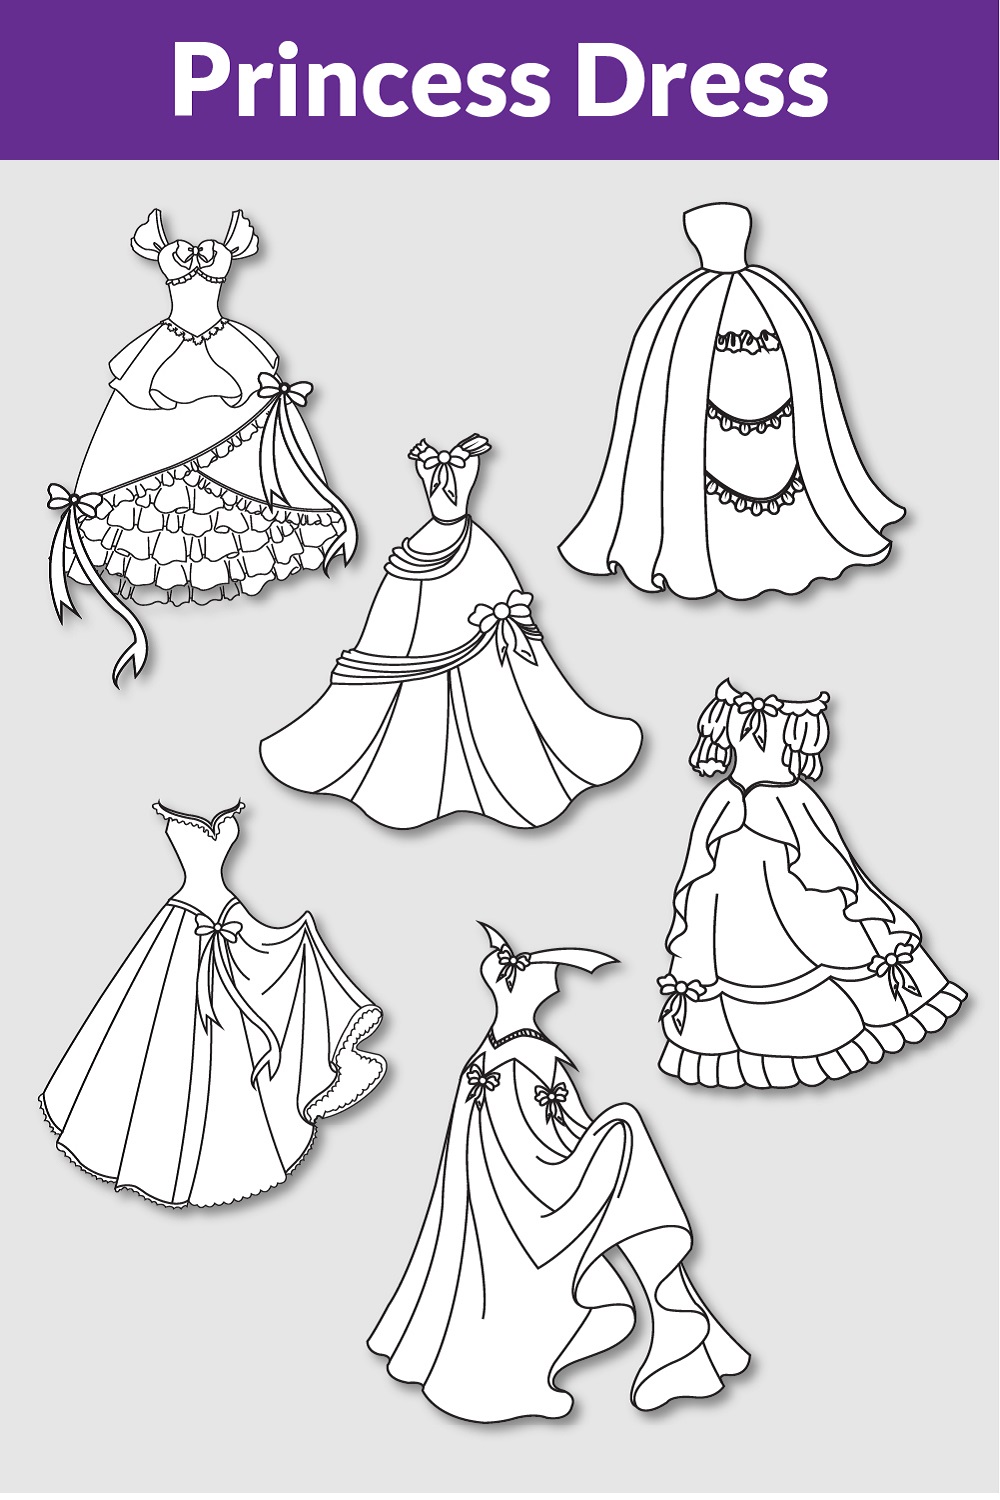 Princess Dress Master Bundle pinterest preview image.